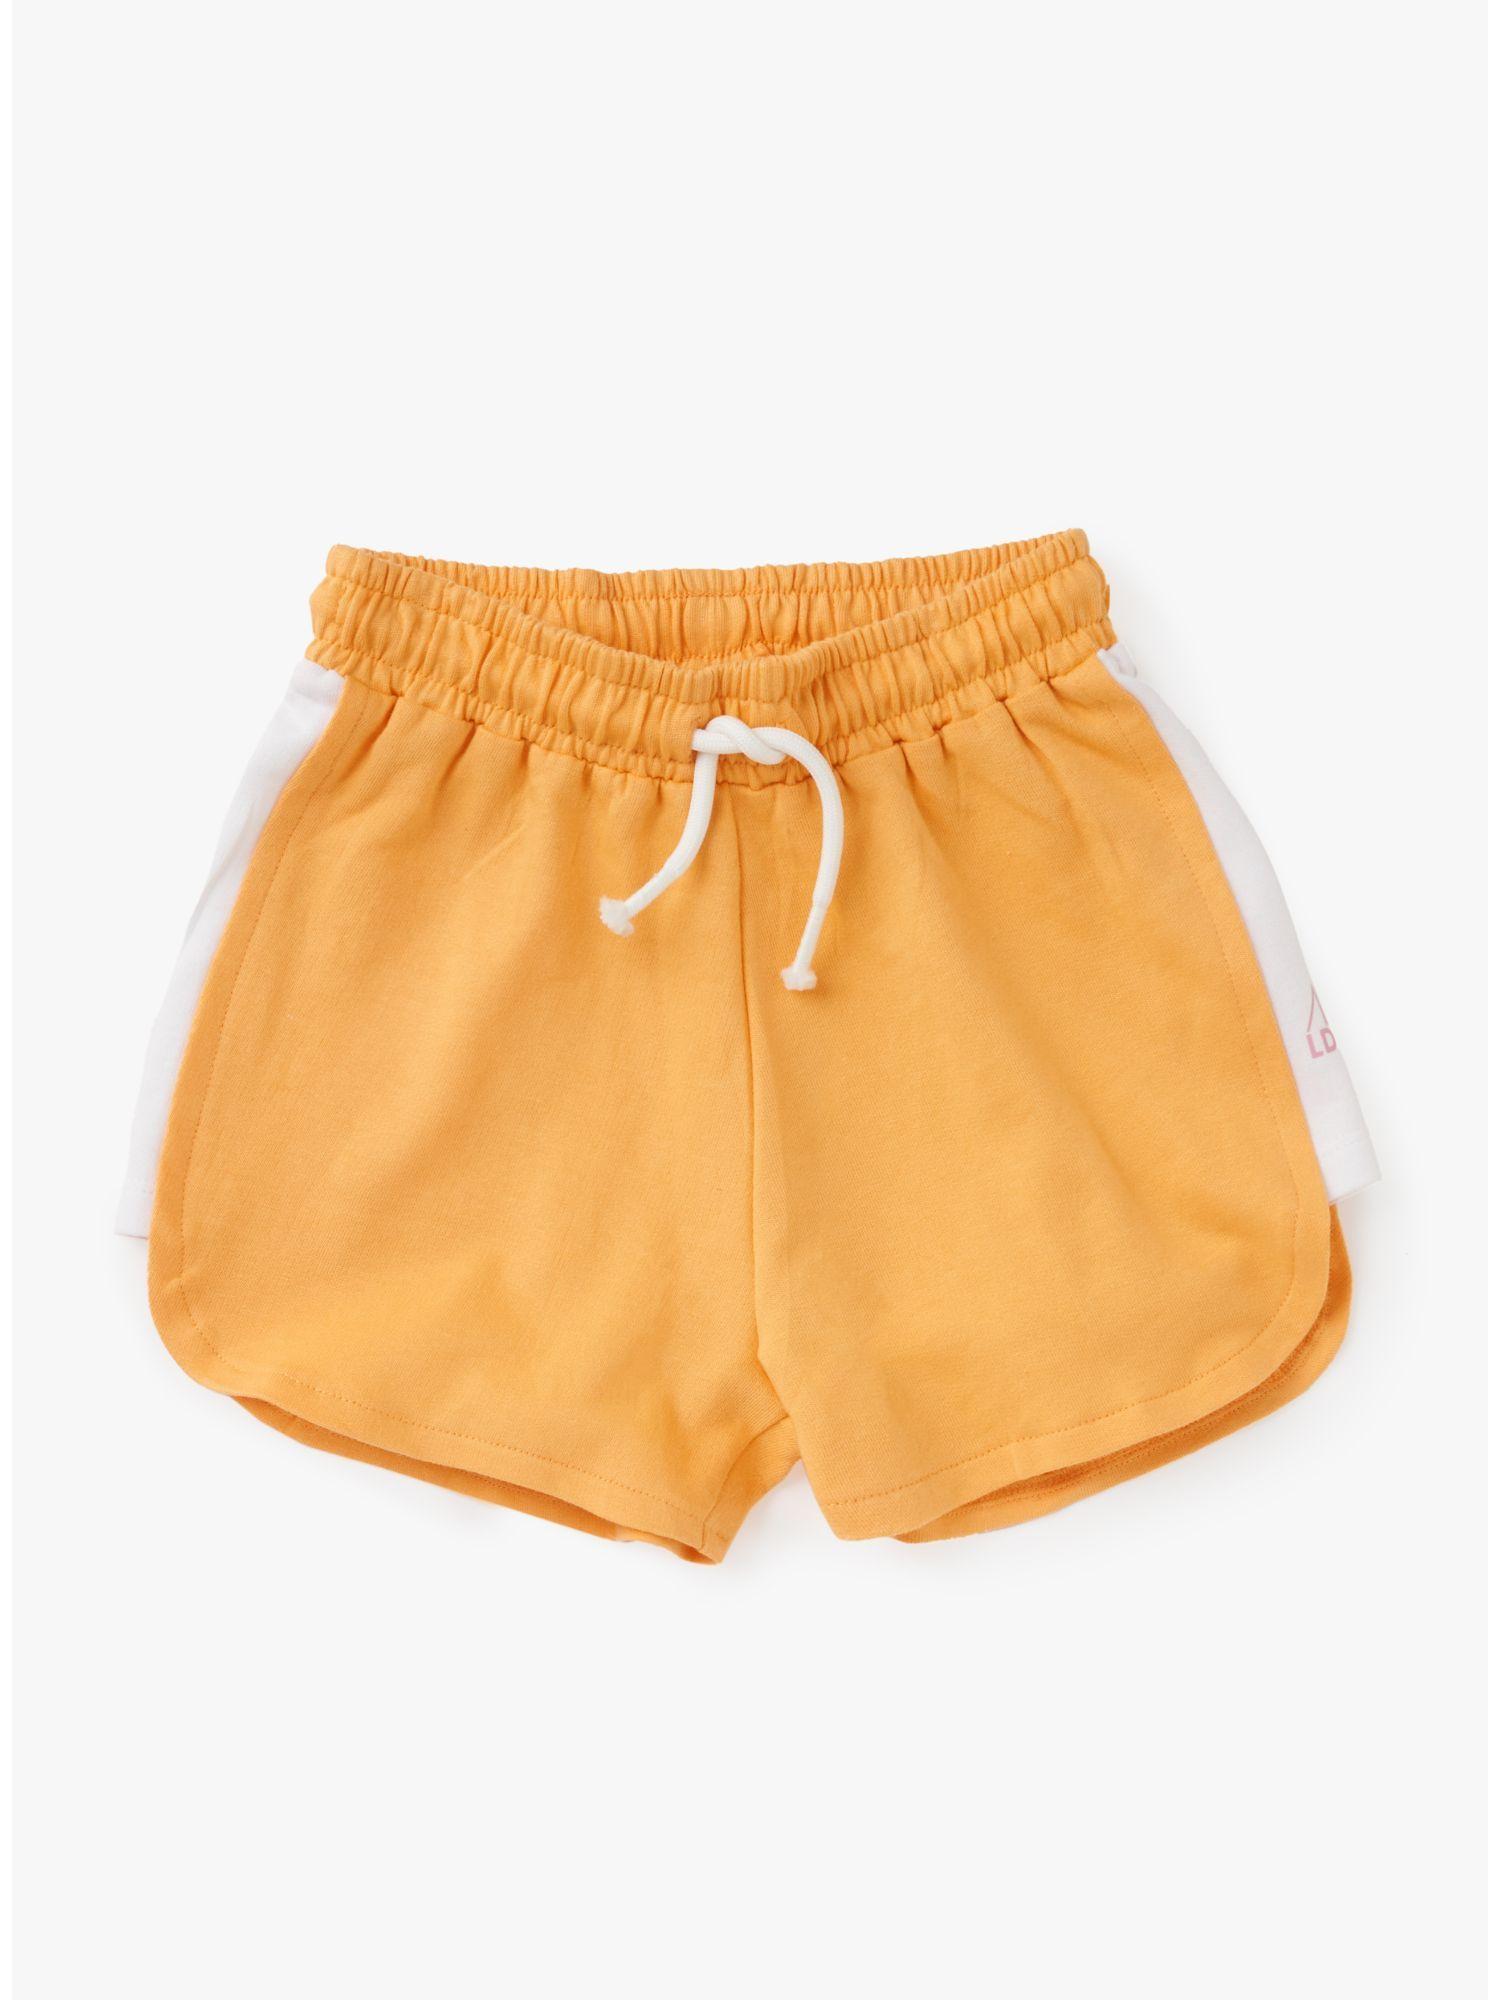 solid orange shorts